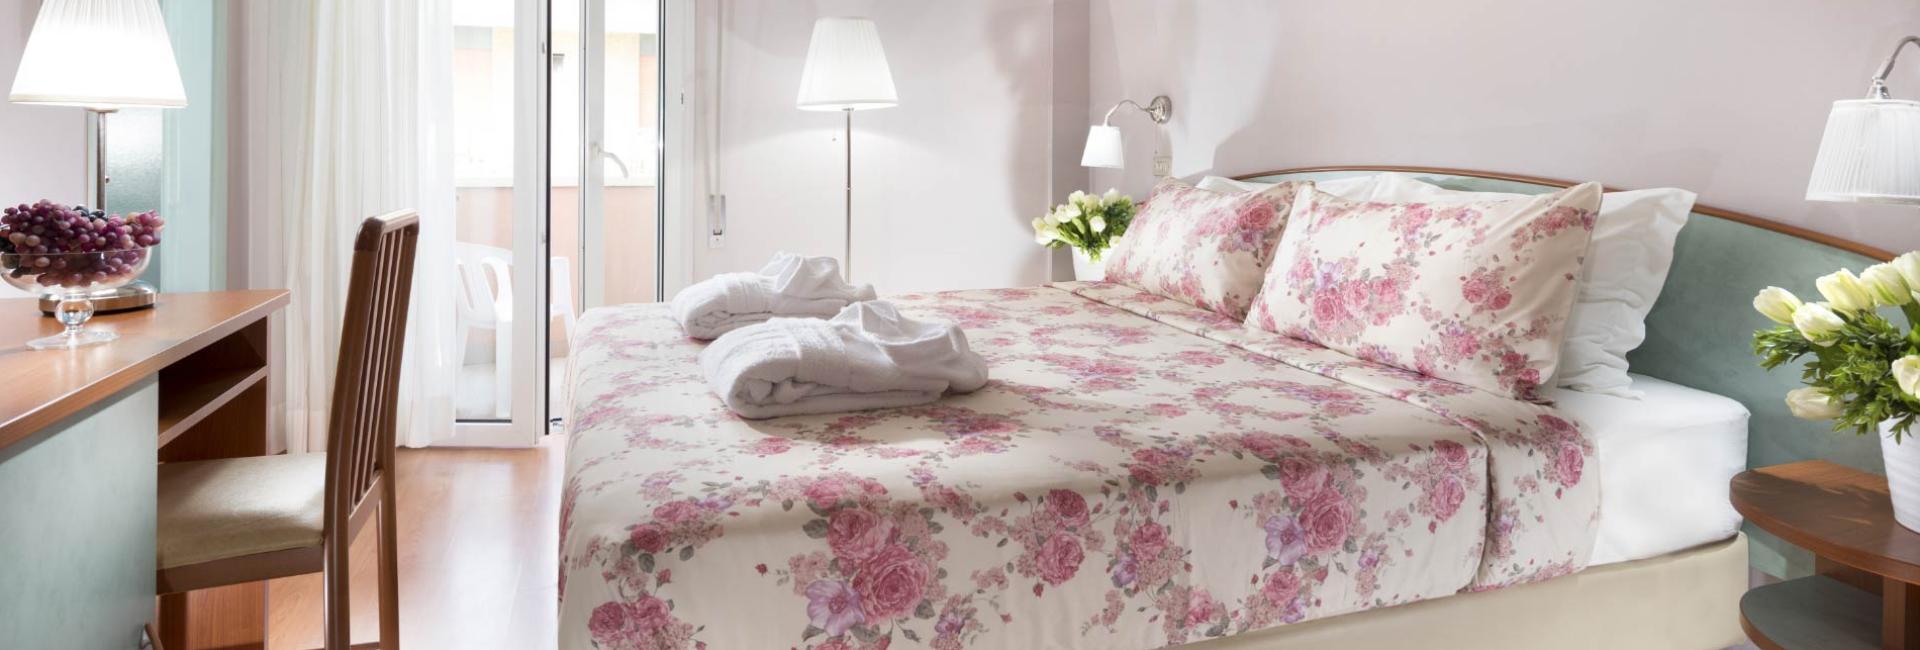 hotelsympathy en comfort-rooms 004